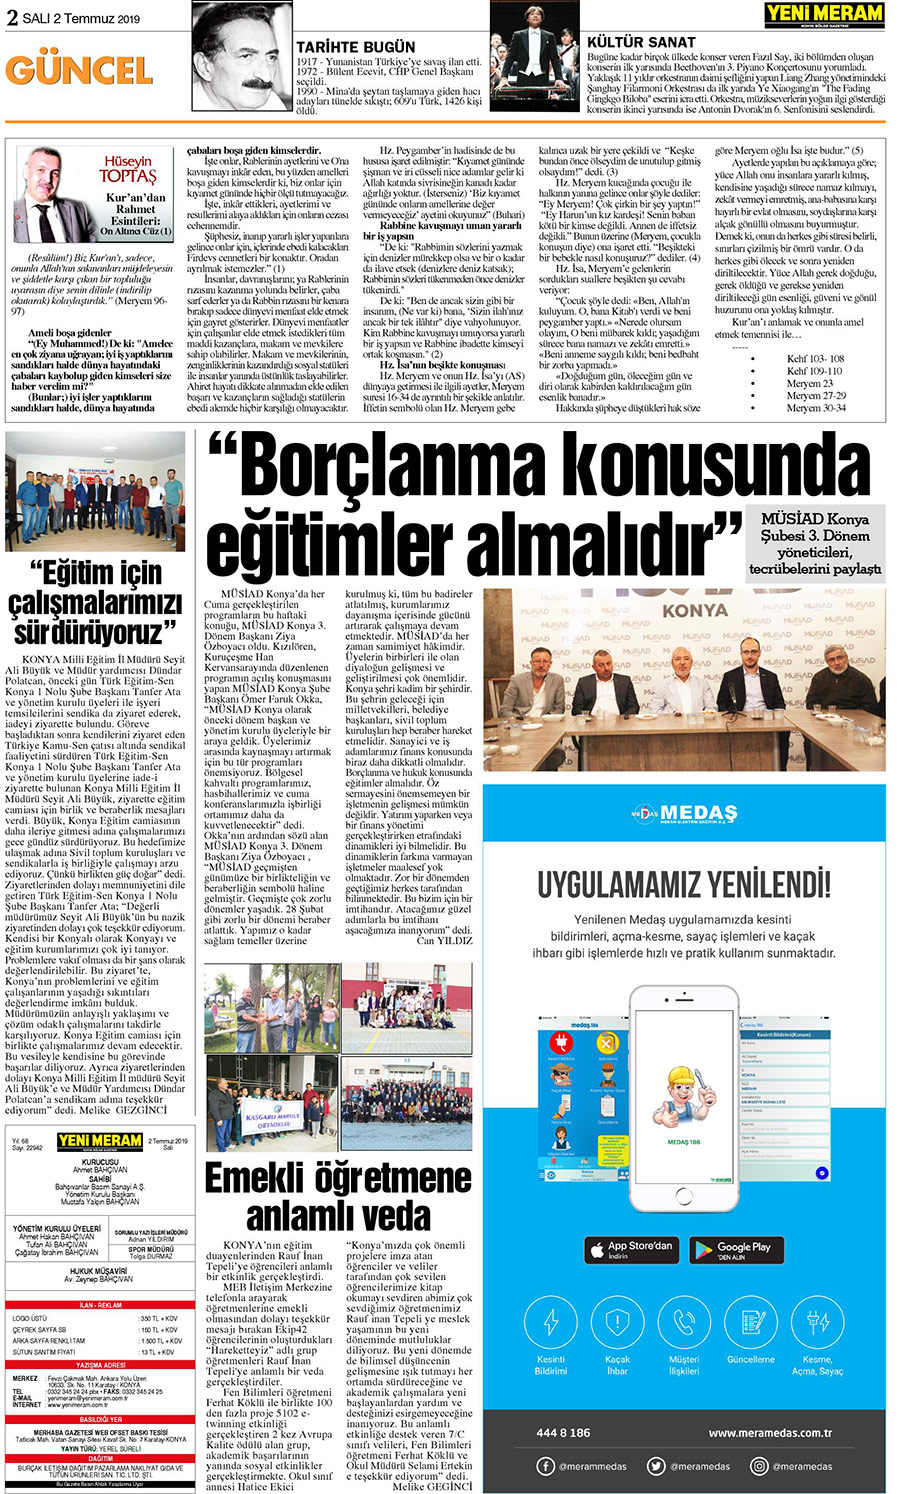 2 Temmuz 2019 Yeni Meram Gazetesi